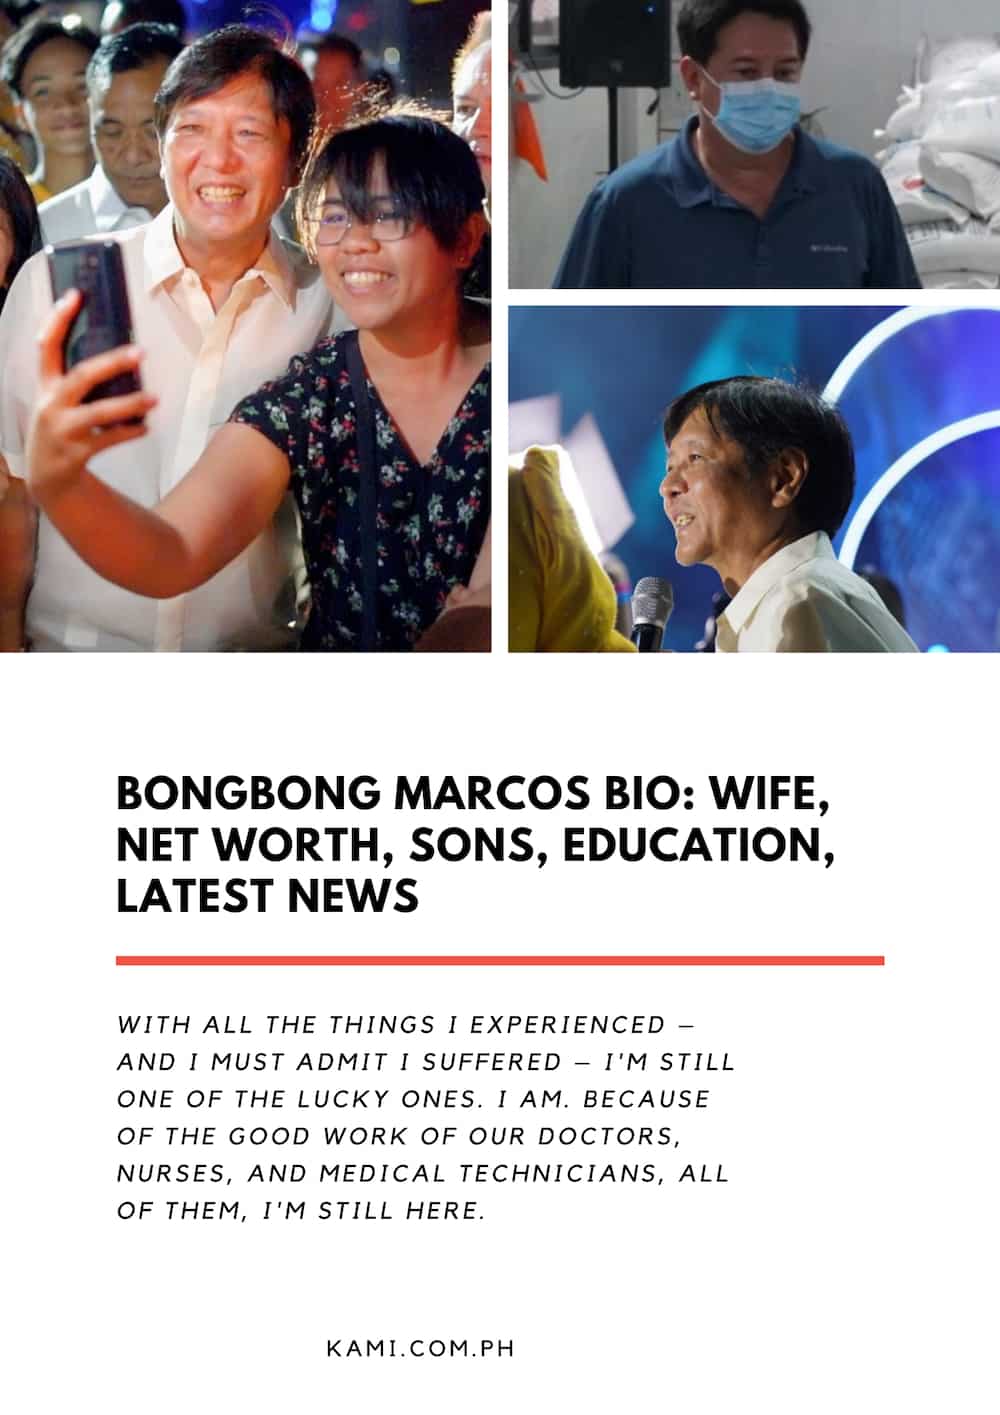 Bongbong Marcos bio: wife, net worth, sons, education, latest news